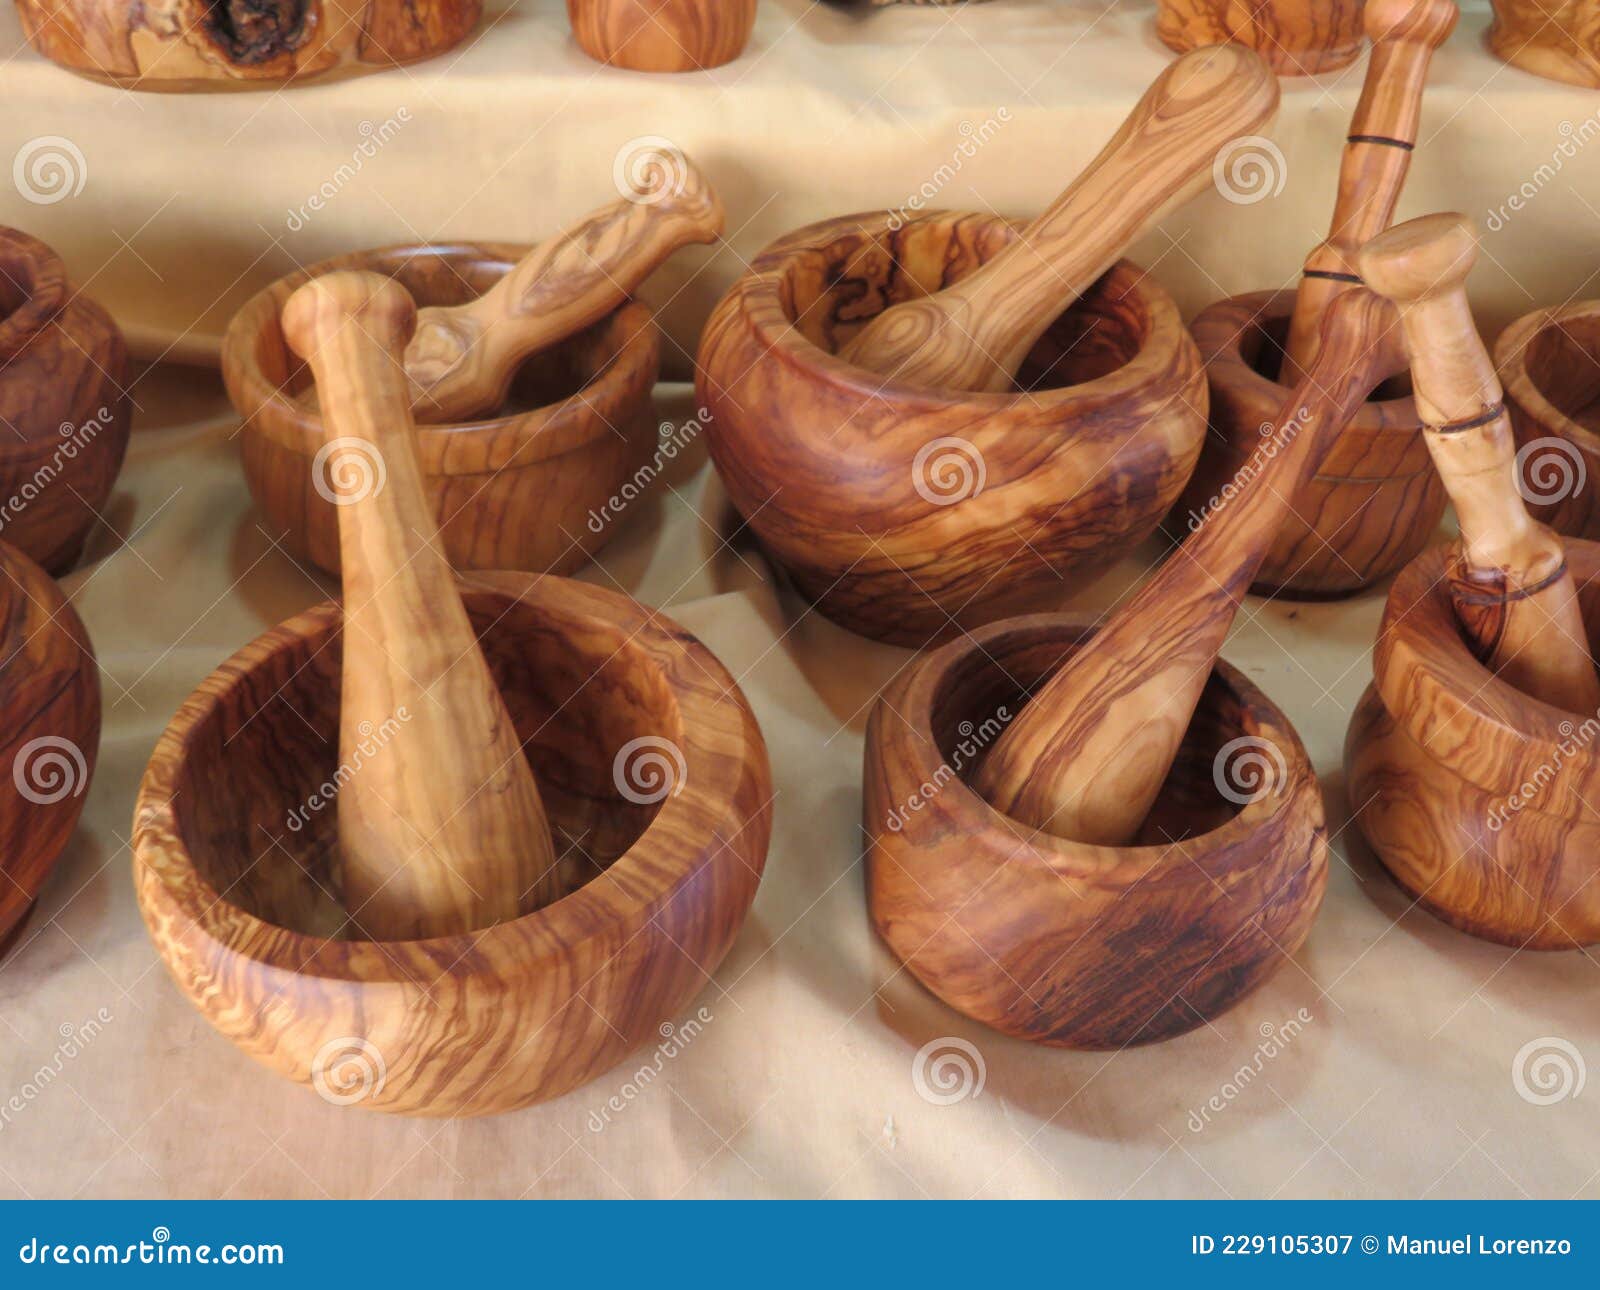 beautiful handmade wooden objects handmade kitchen utensils